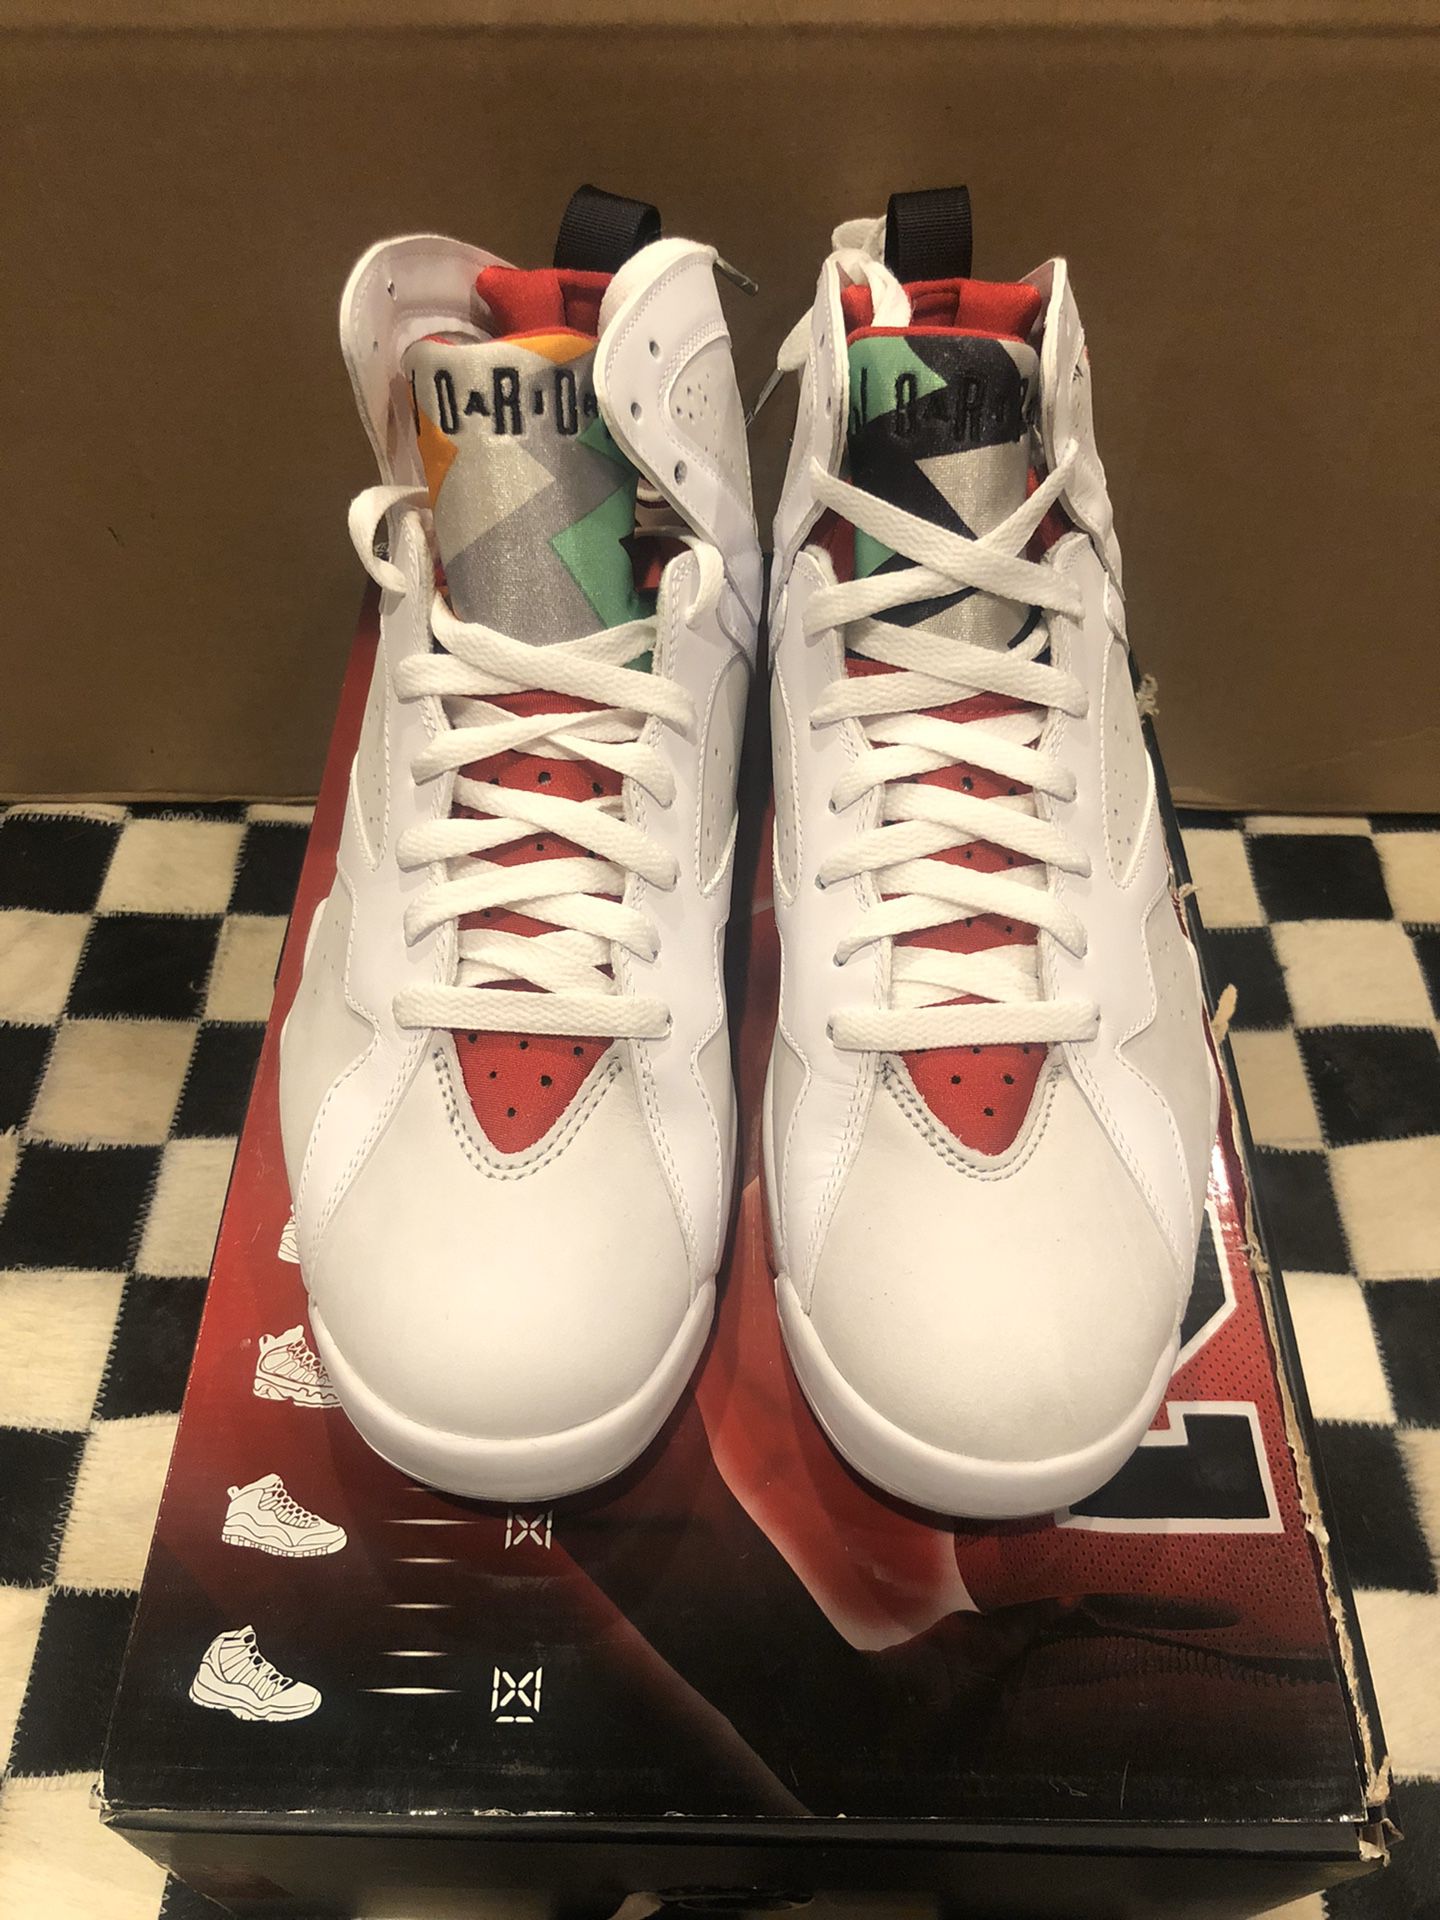 Nike Air Jordan Retro 7 “CDP Hare” Size 9. Worn 1x